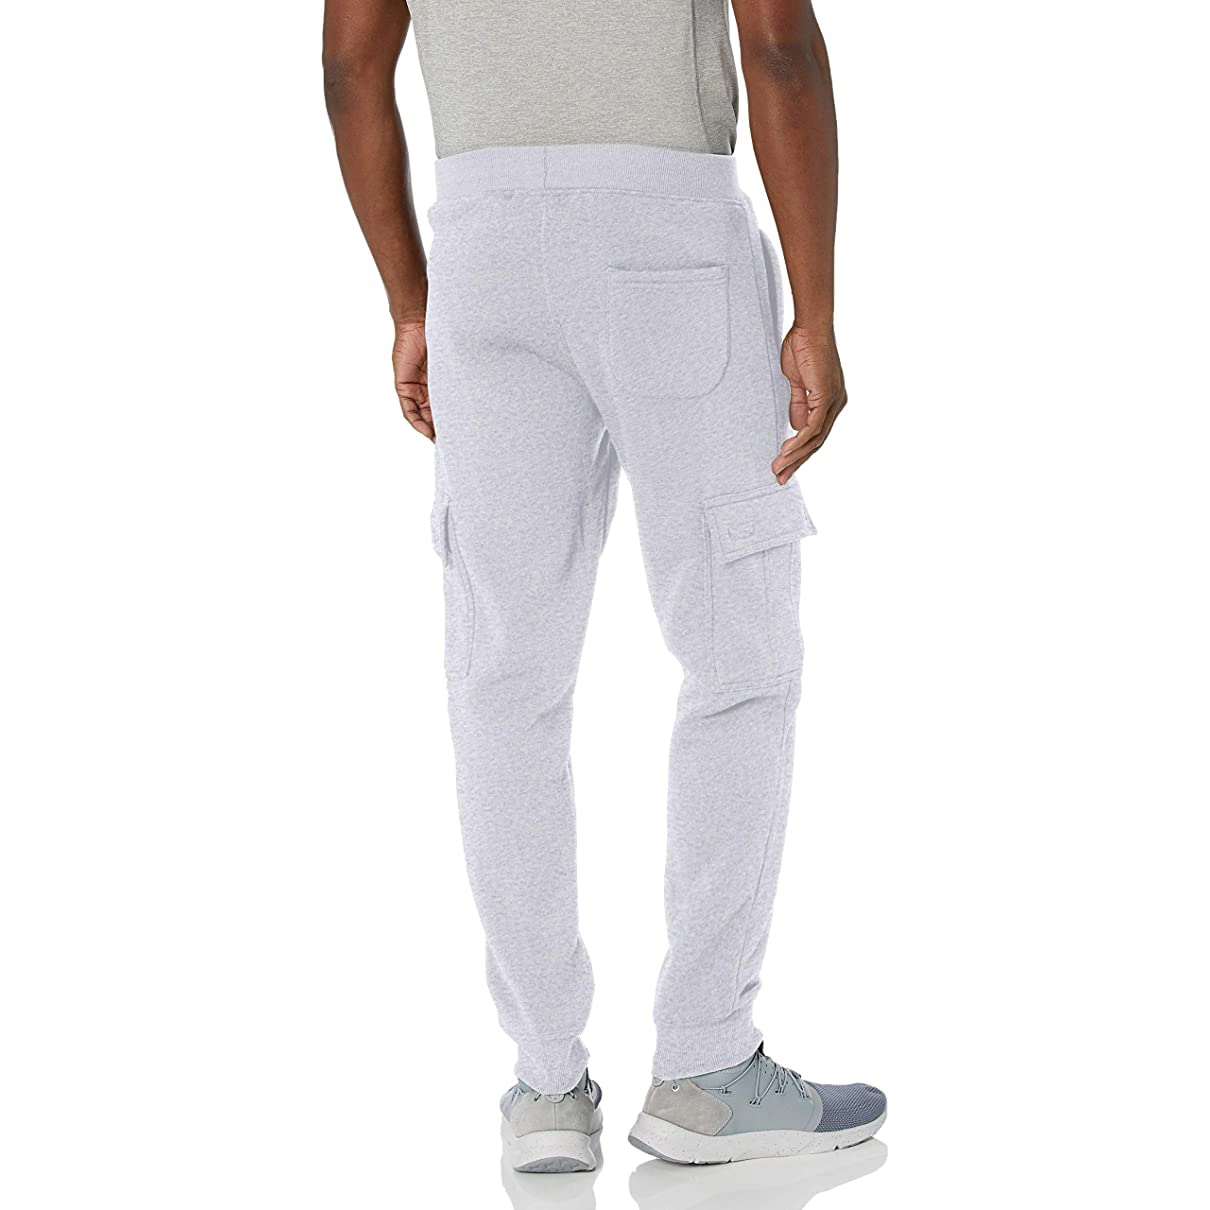 Pantalones de chándal básicos para hombre, con cordón, para correr, atléticos